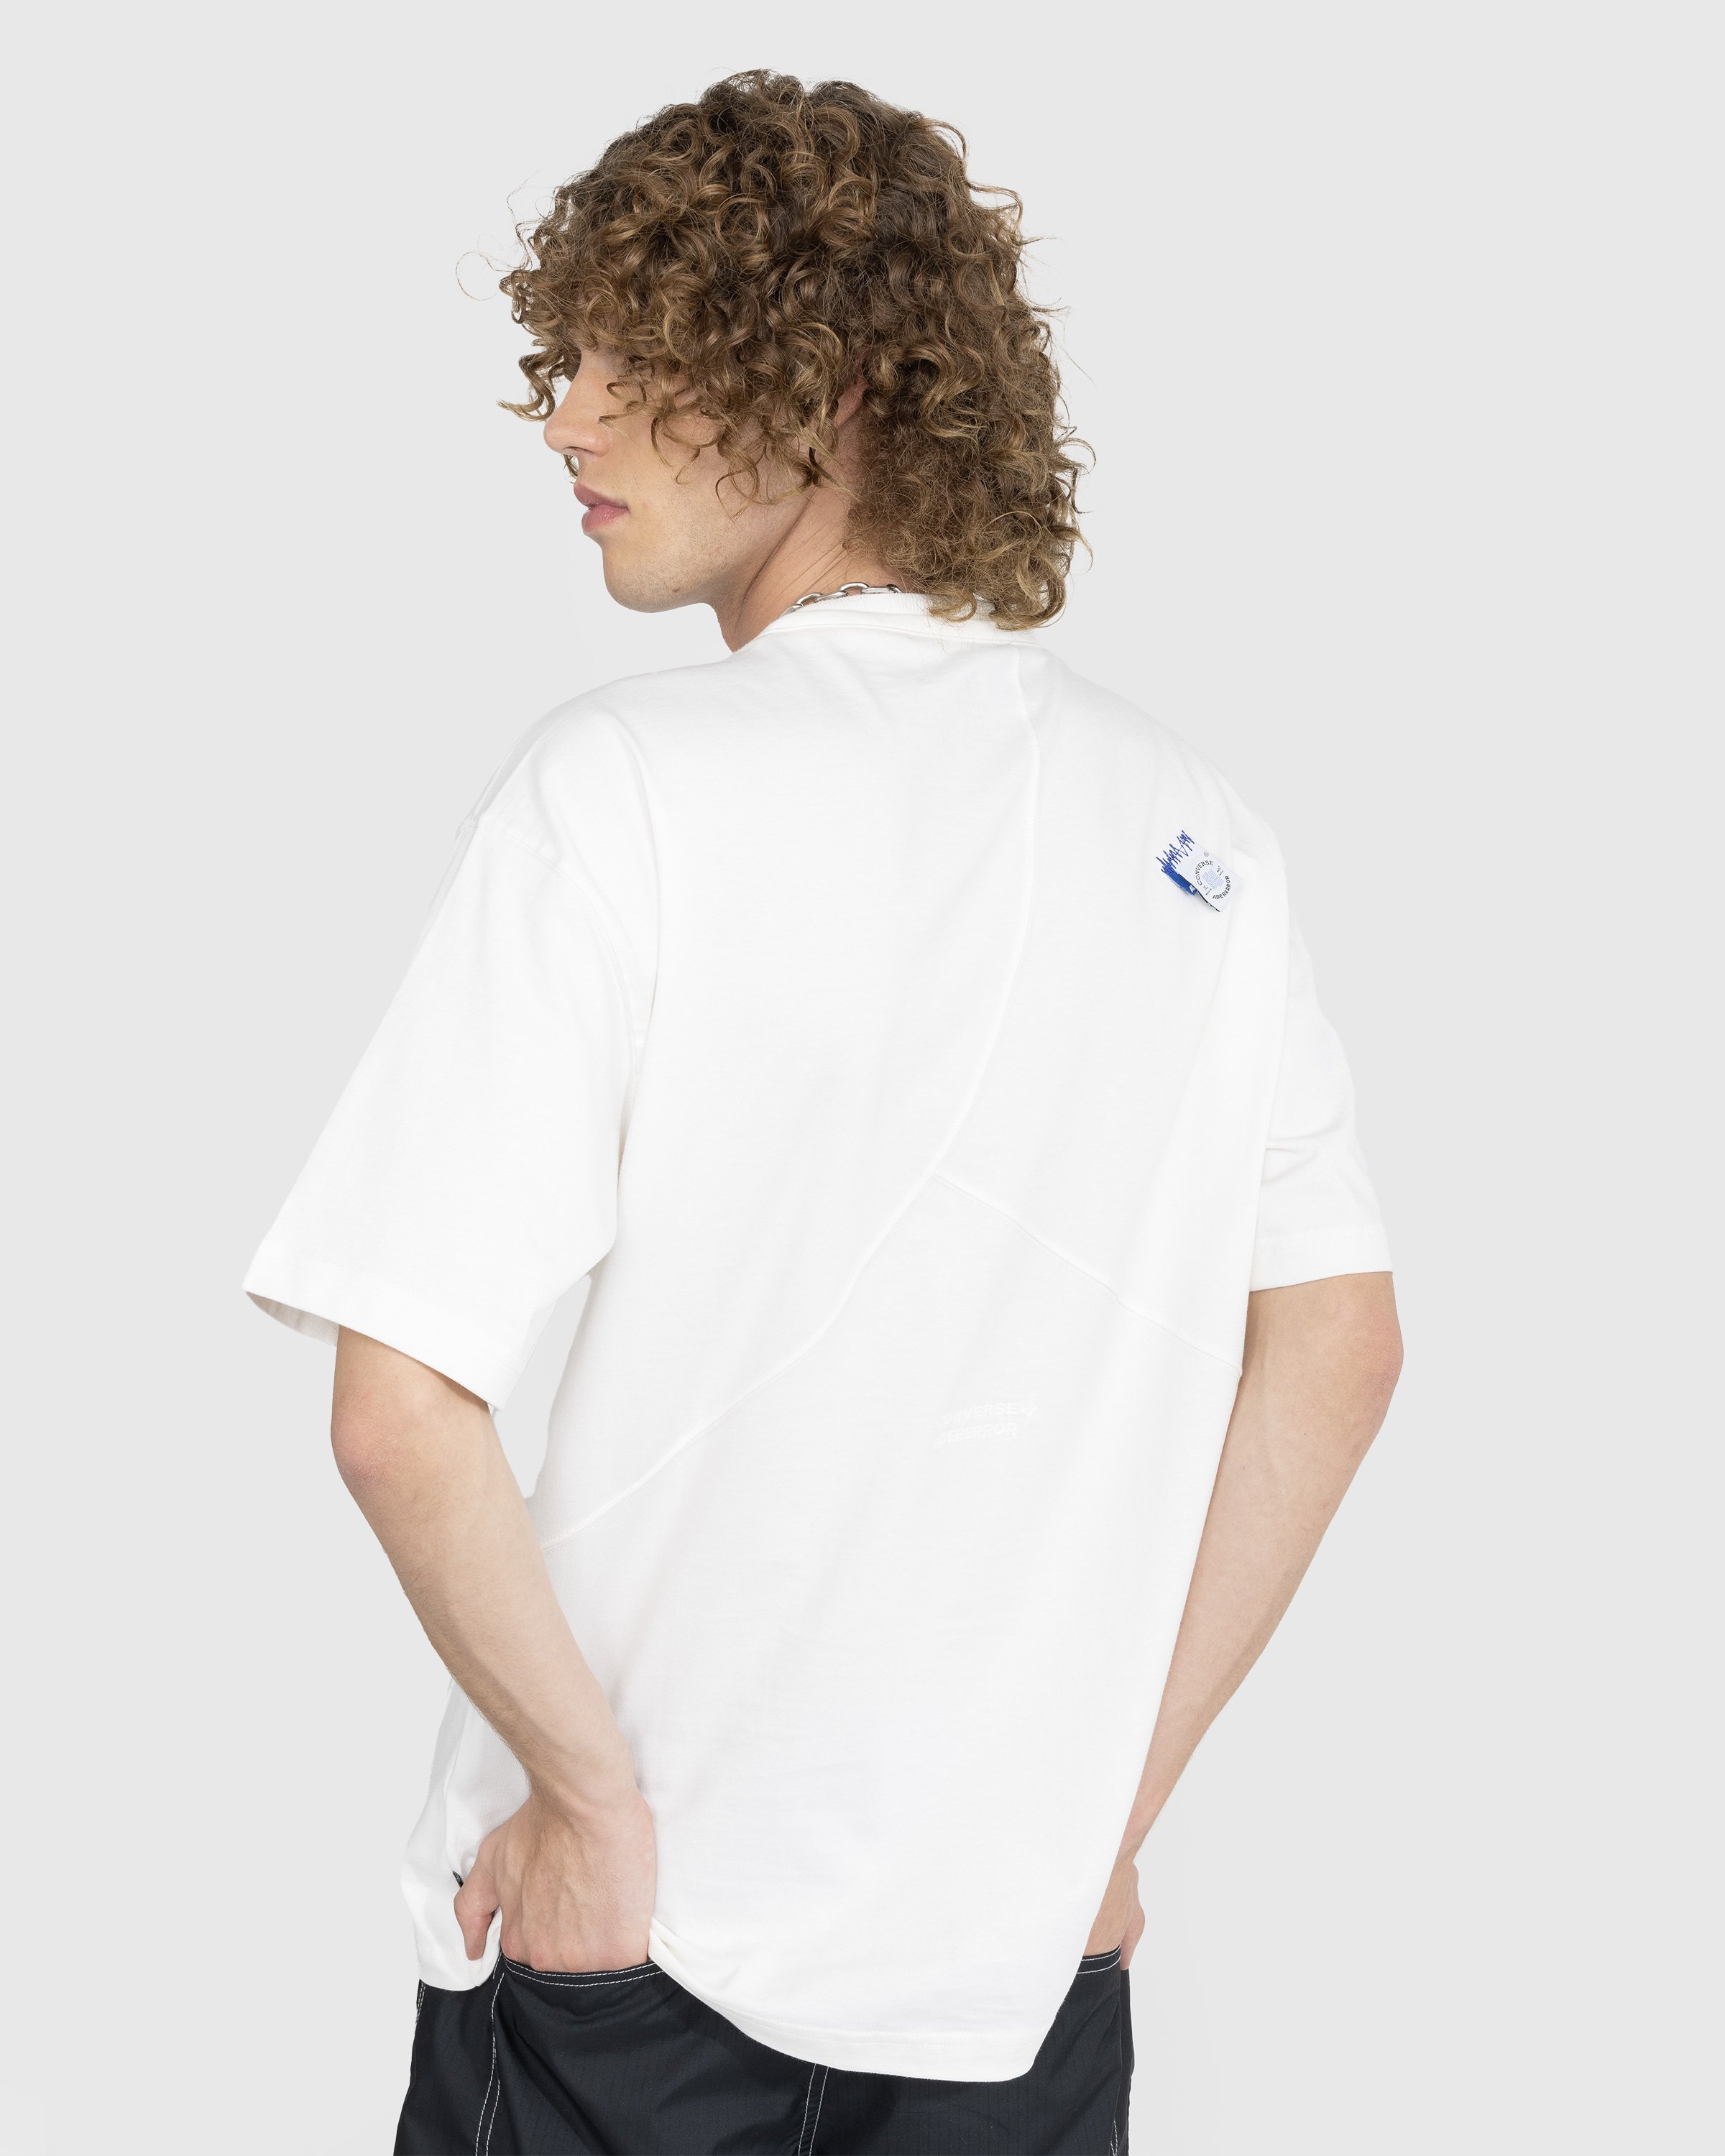 Converse x Ader Error - Shapes T-Shirt Cloud Dancer - Clothing - Beige - Image 3